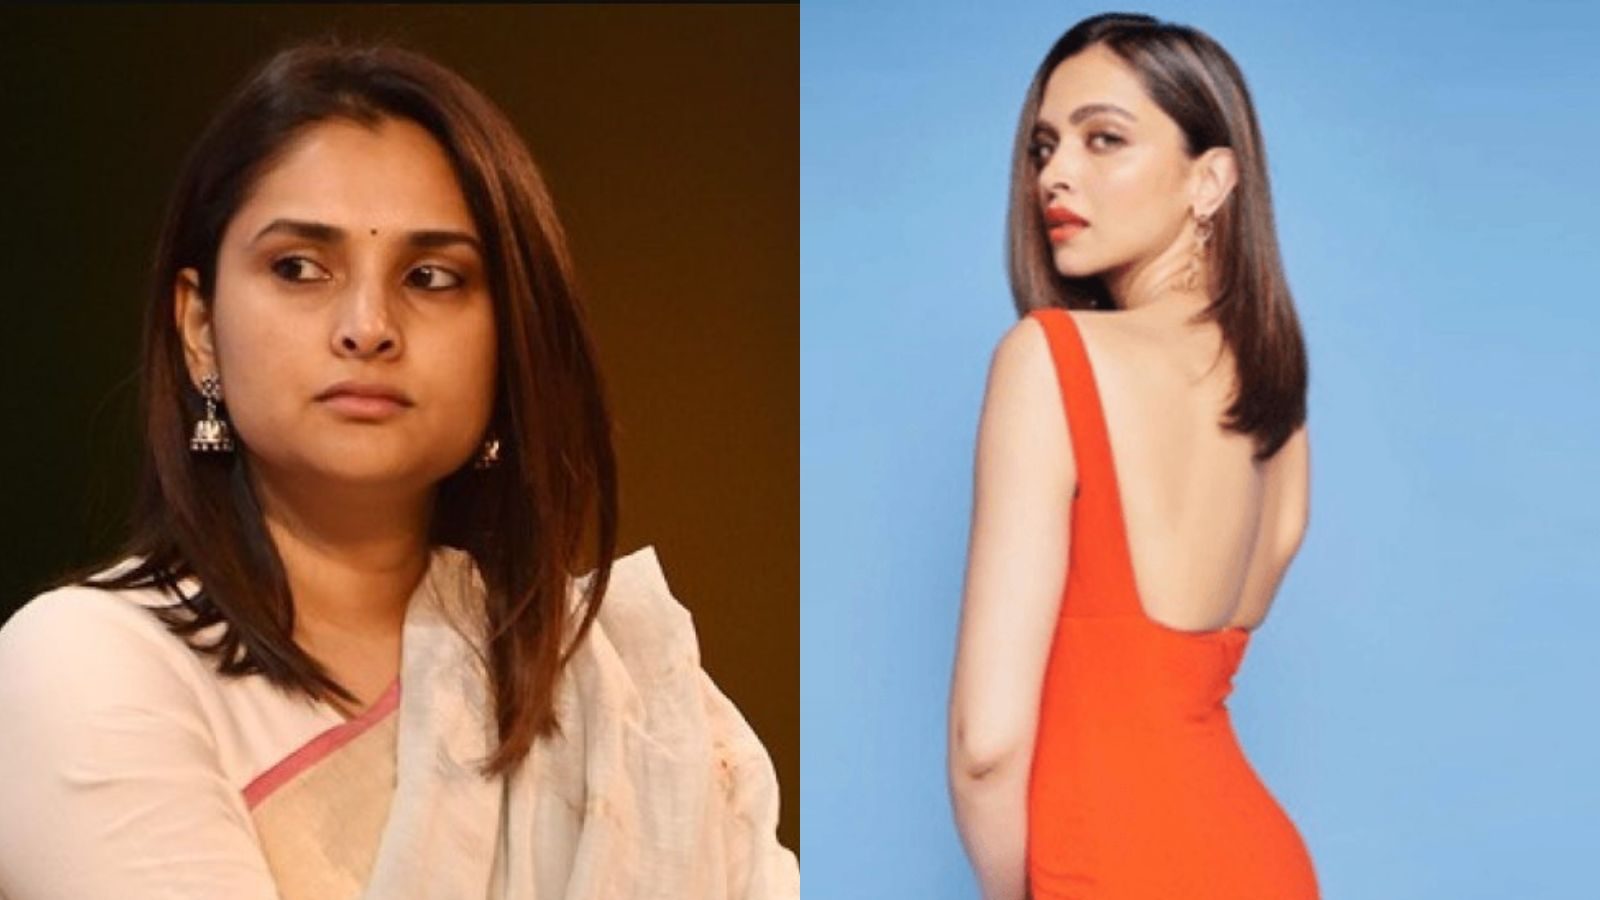 Kuthu Rameya Sex Video - Samantha, Sai Pallavi, now Deepika Padukoneâ€¦ Ramya Spandana Kattam! -  time.news - Time News